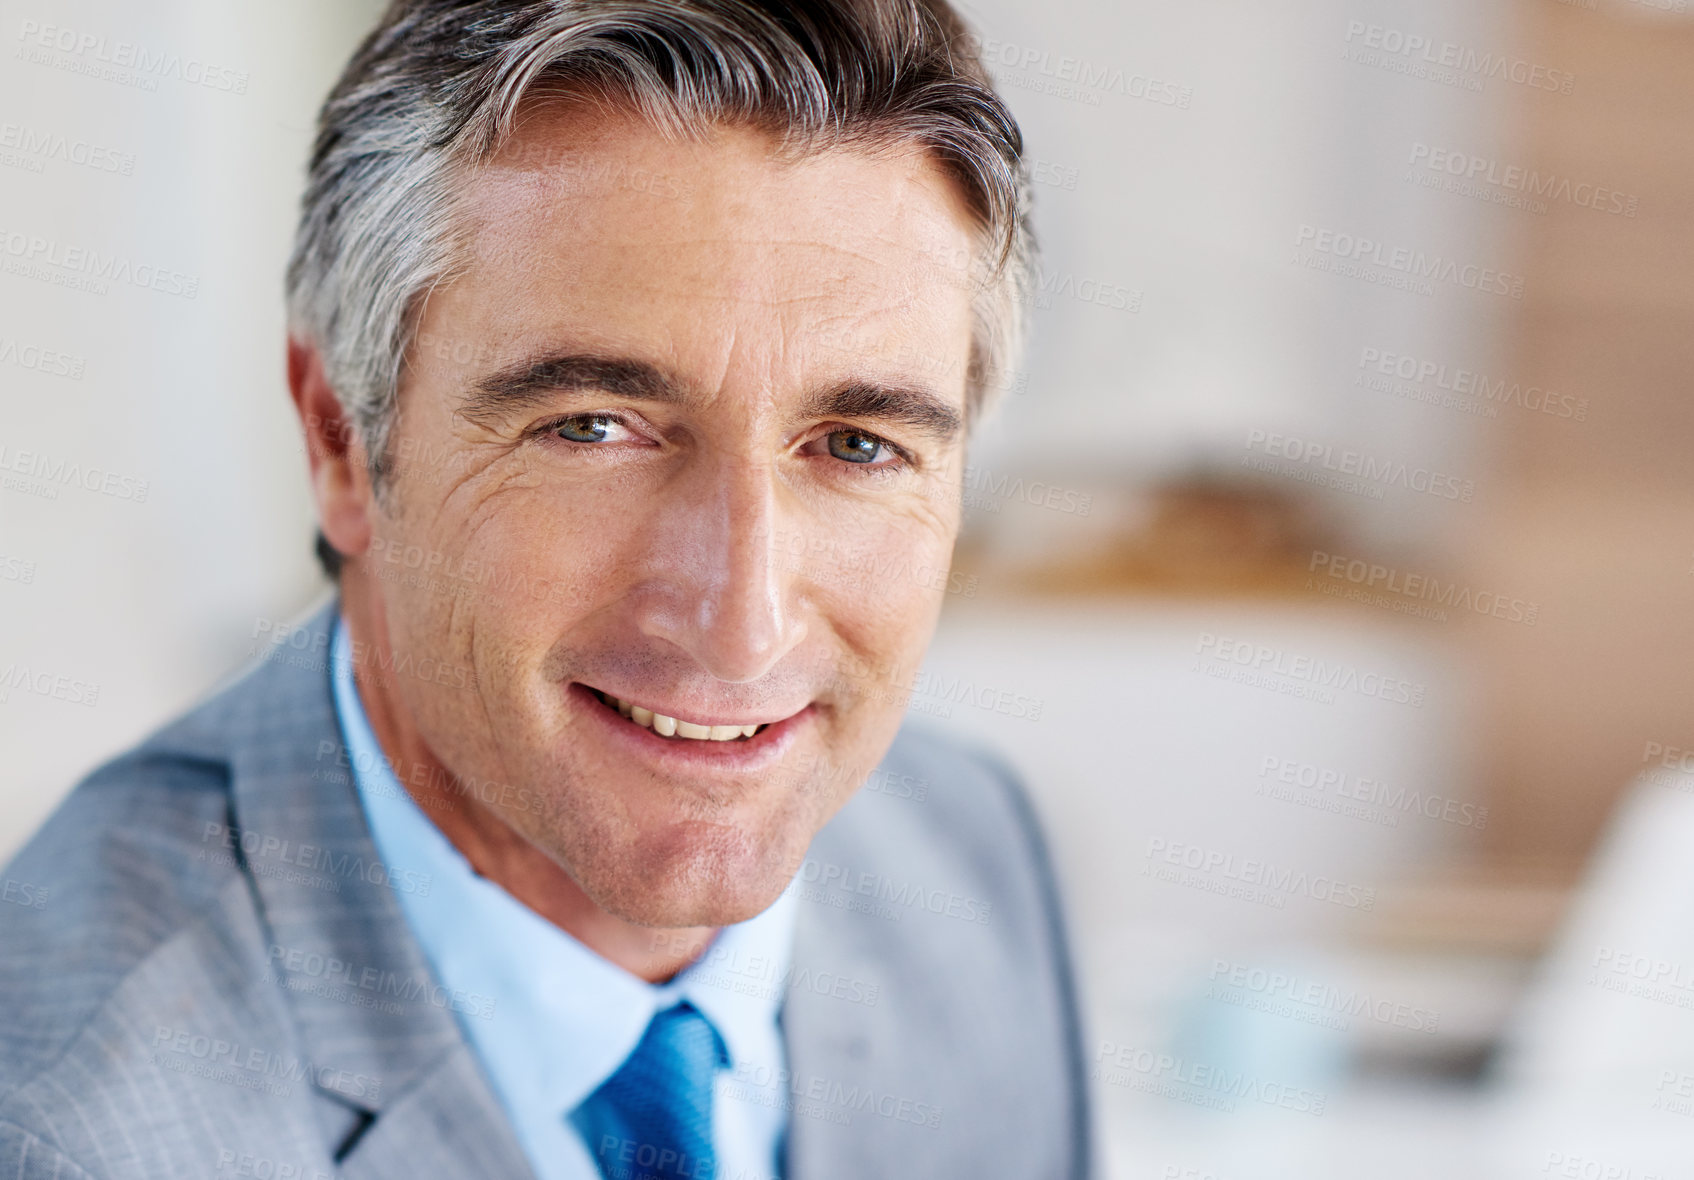 Buy stock photo Portrait of a confident-looking mature businessman